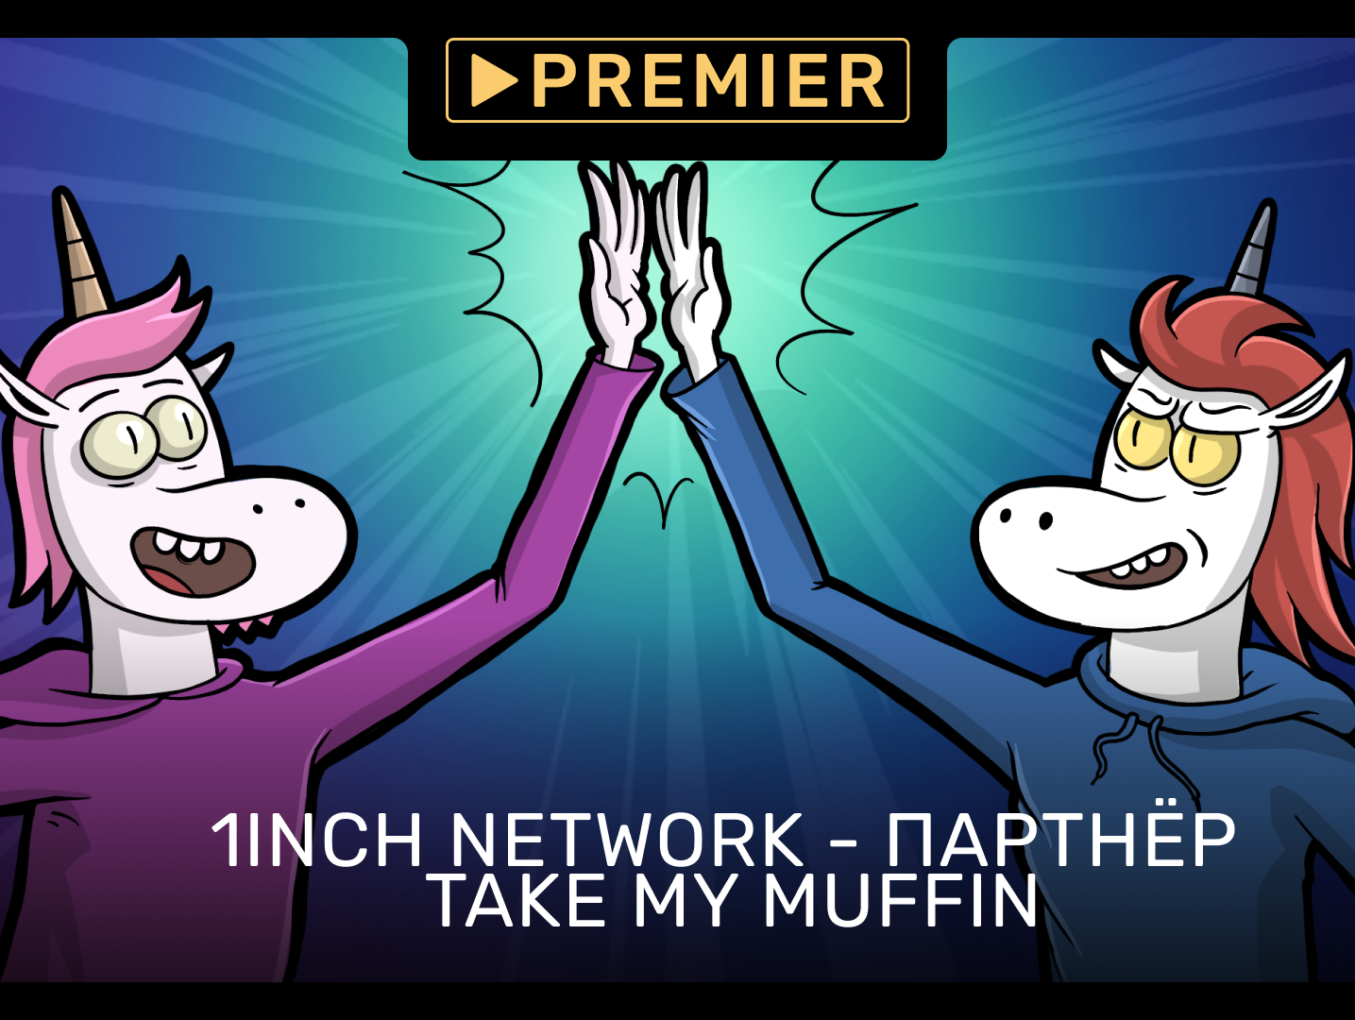 Take my Muffin. Take my Muffin NFT. Take my Muffin draka.